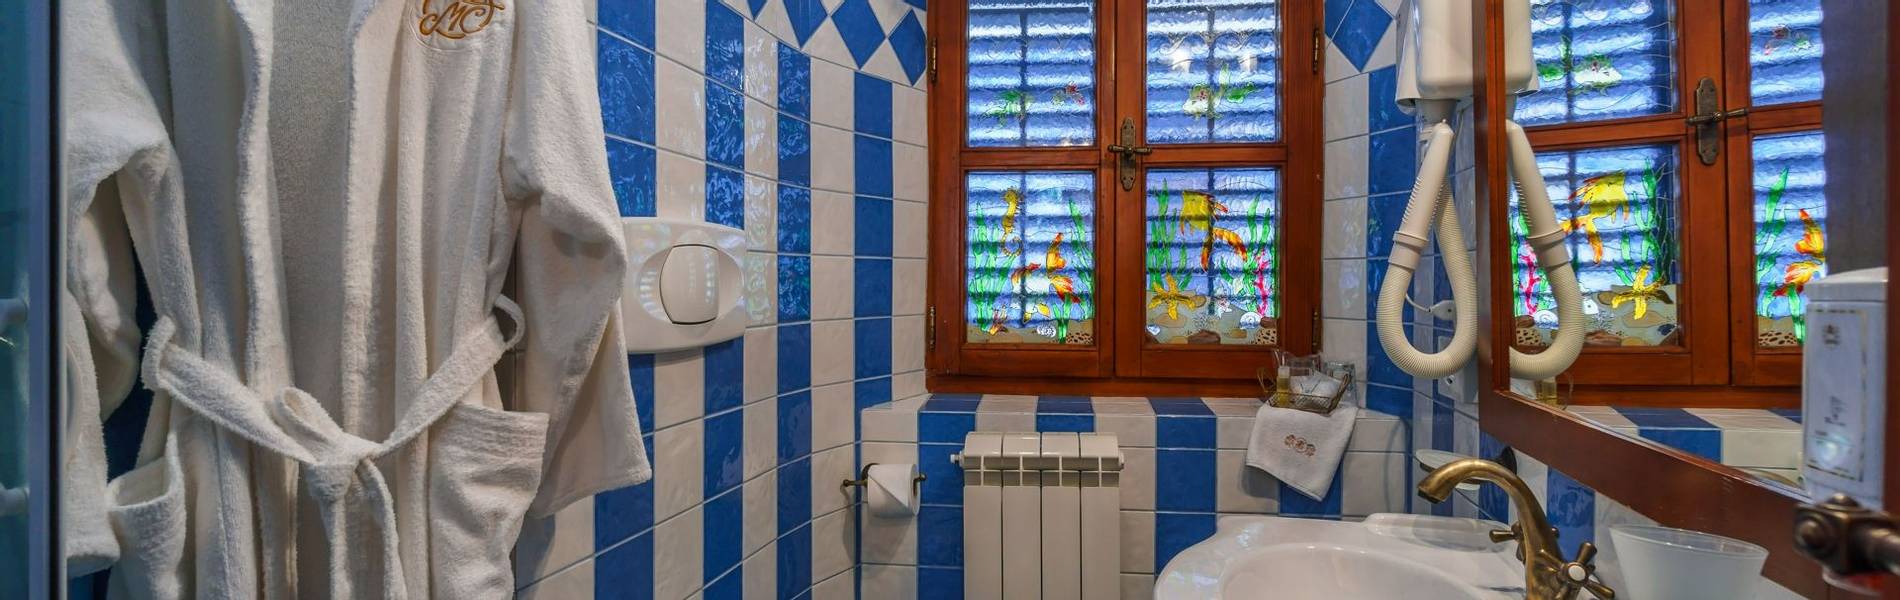 Monte Cristo-bathroom.jpg